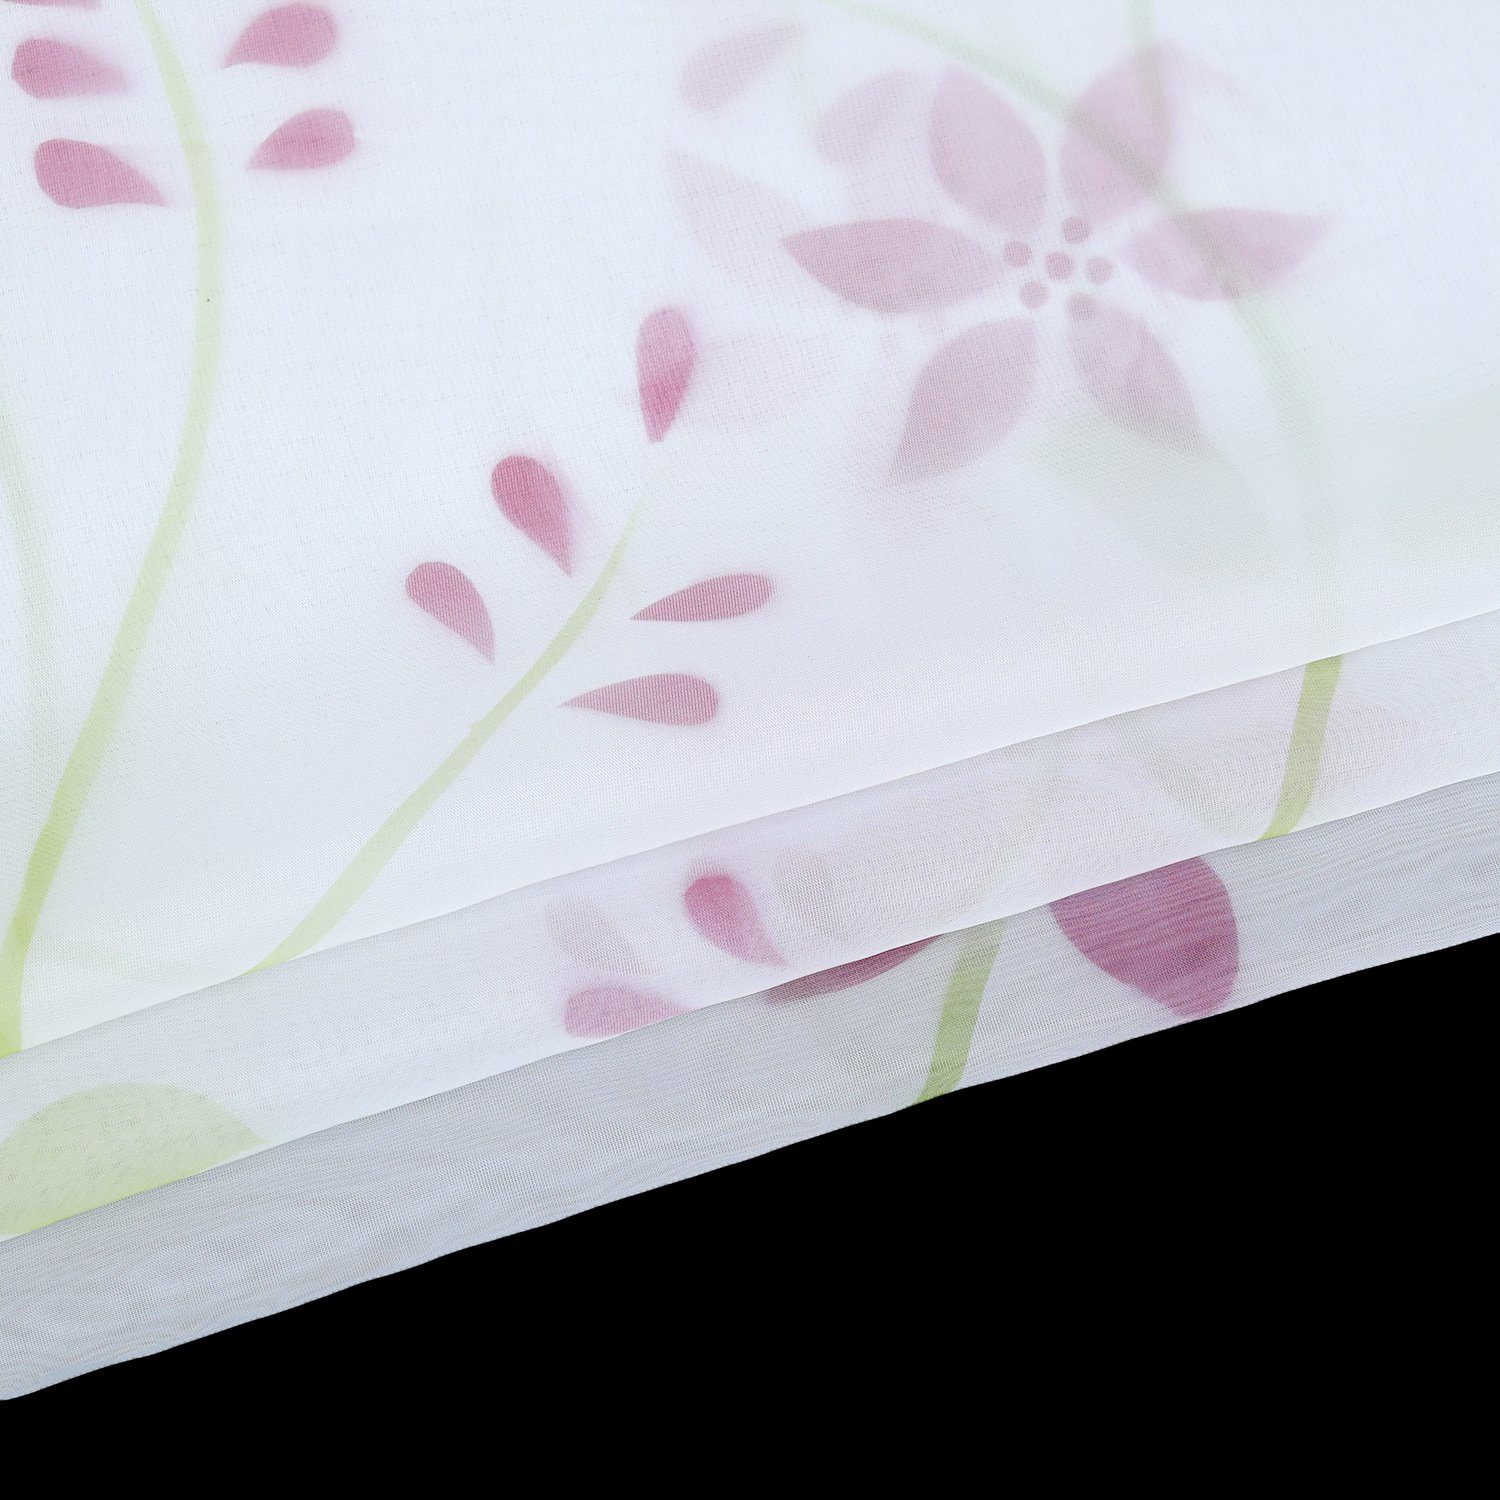 Muster, Yujiao Mao, transparent, (1 Kräuselband St), mit Blumen Rosa Voile Gardine, Modern,